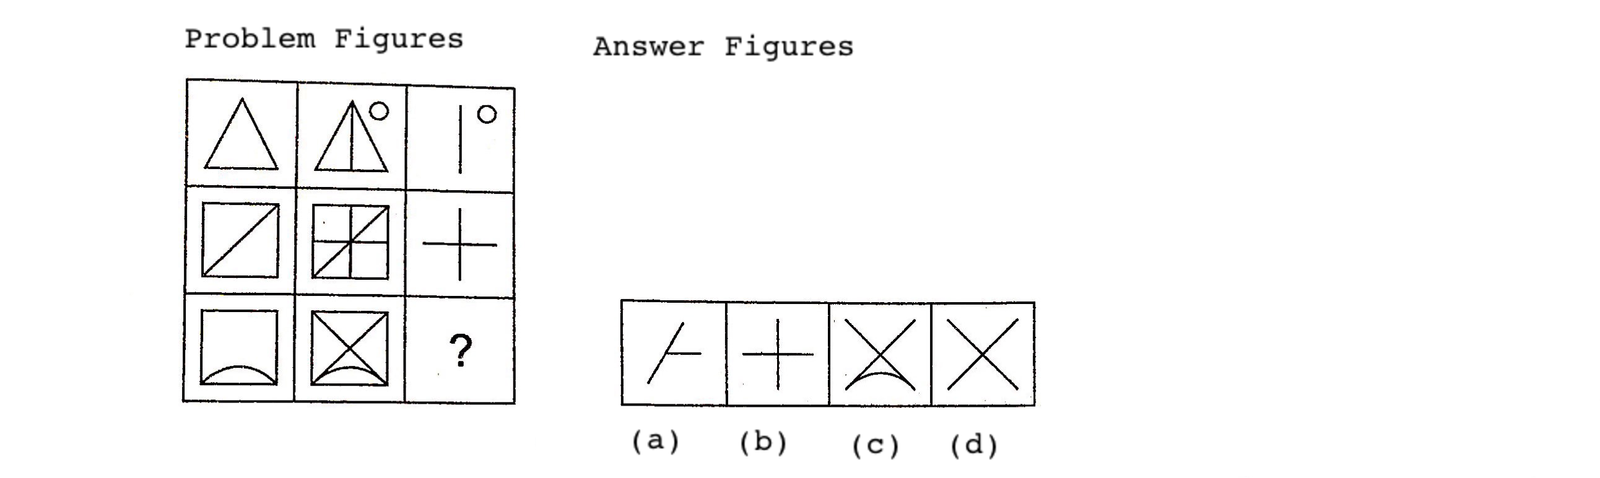 figure-matrix-non-verbal-reasoning-introduction---figure-matrix-problems